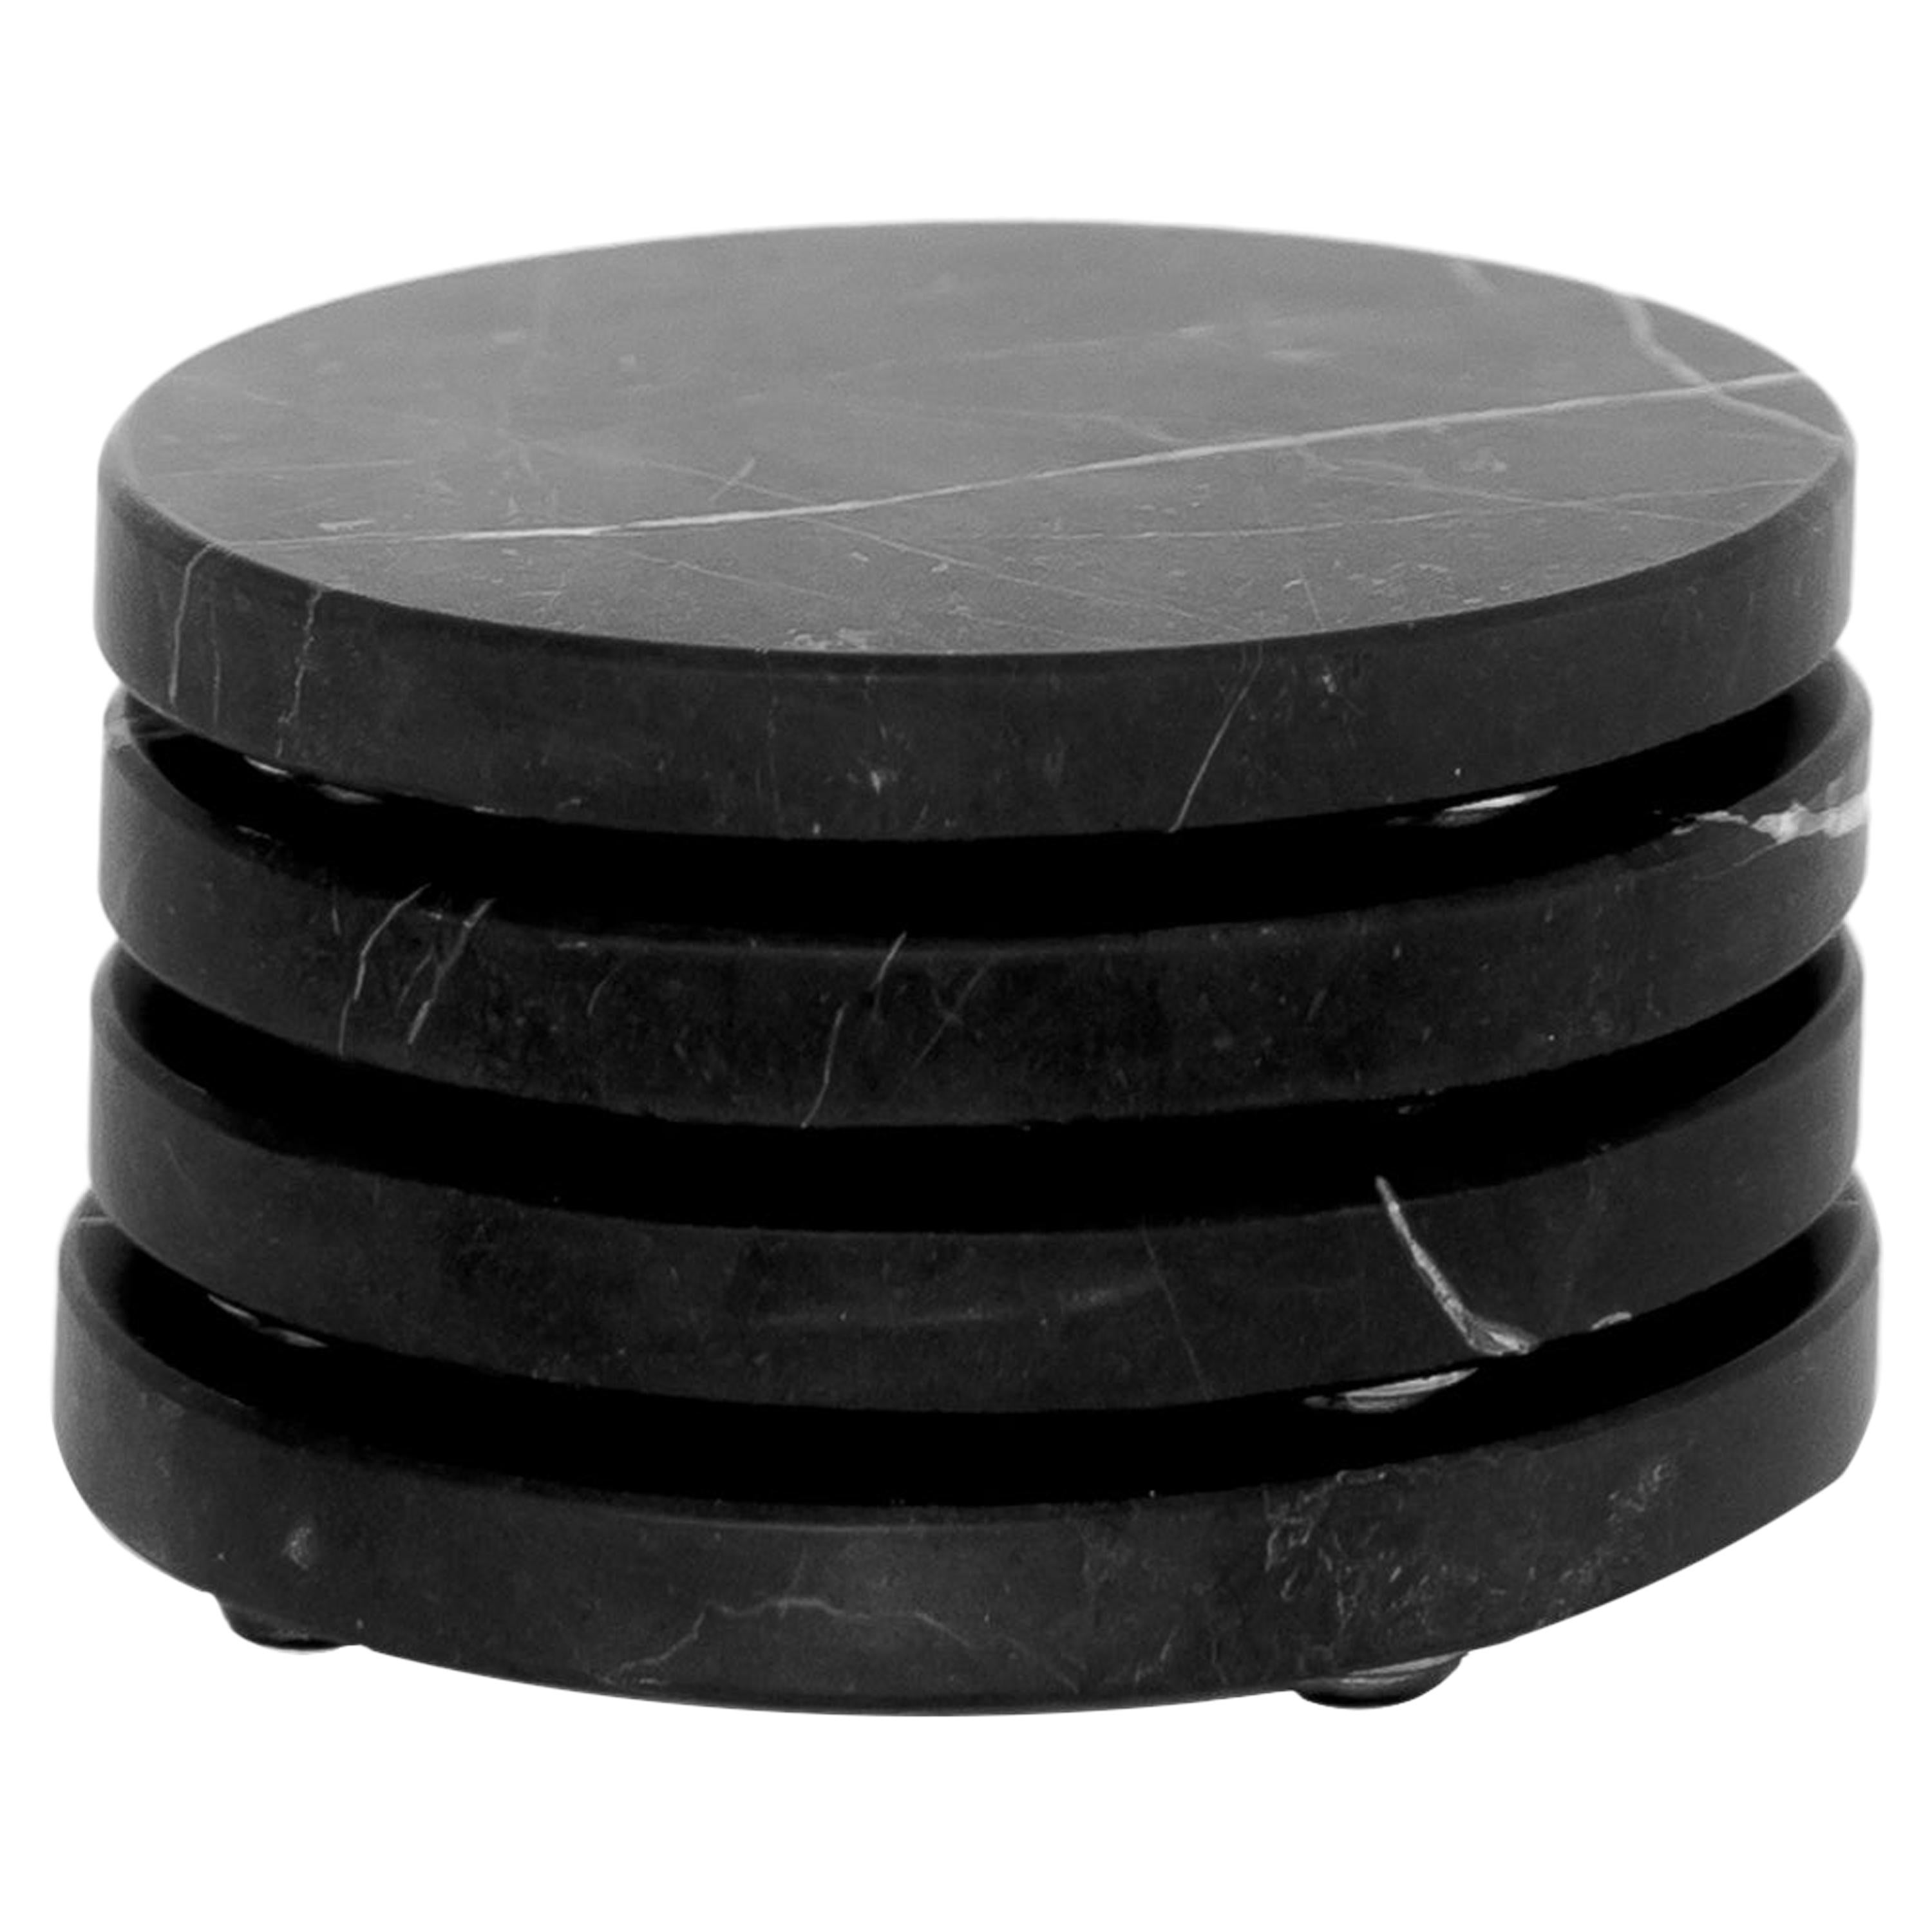 Round Coasters set in black marble